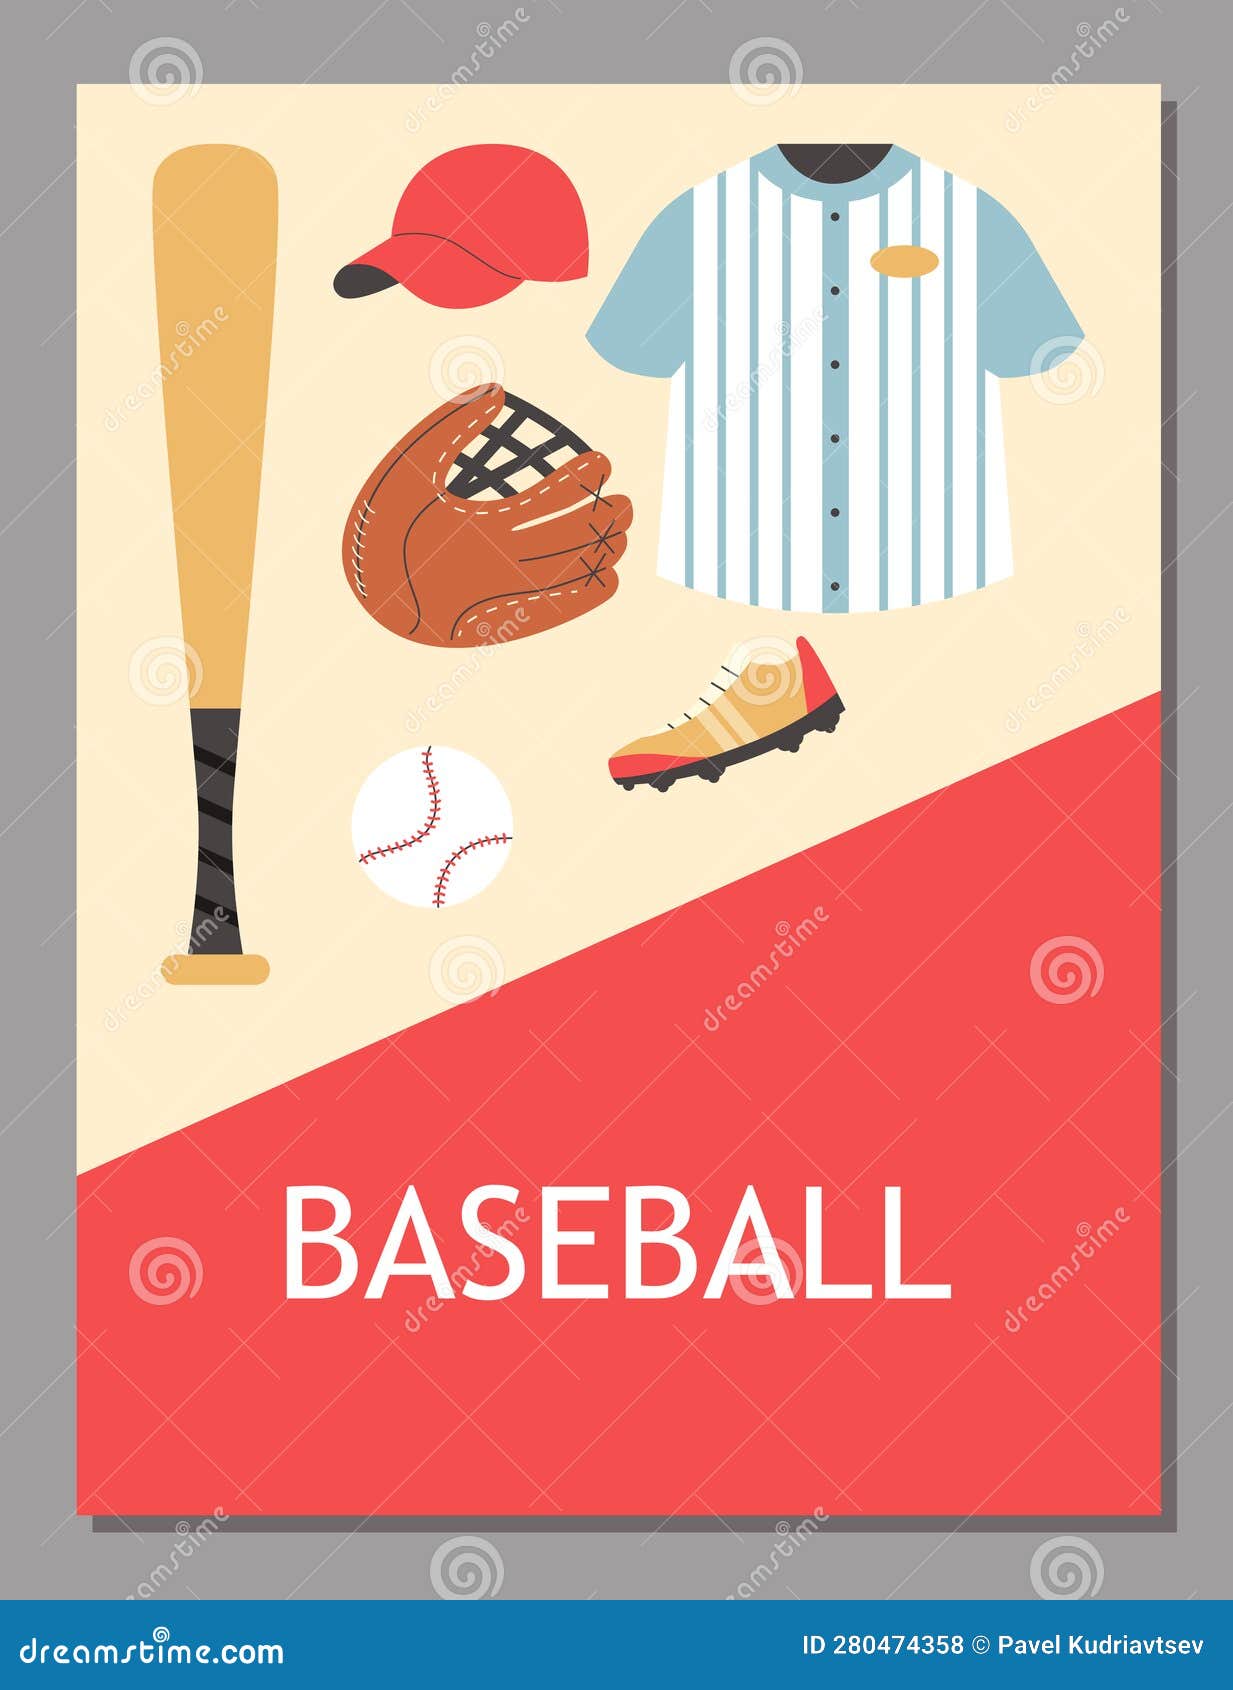 Baseball Equipment Shop Advertising Poster, Flat Vector Illustration